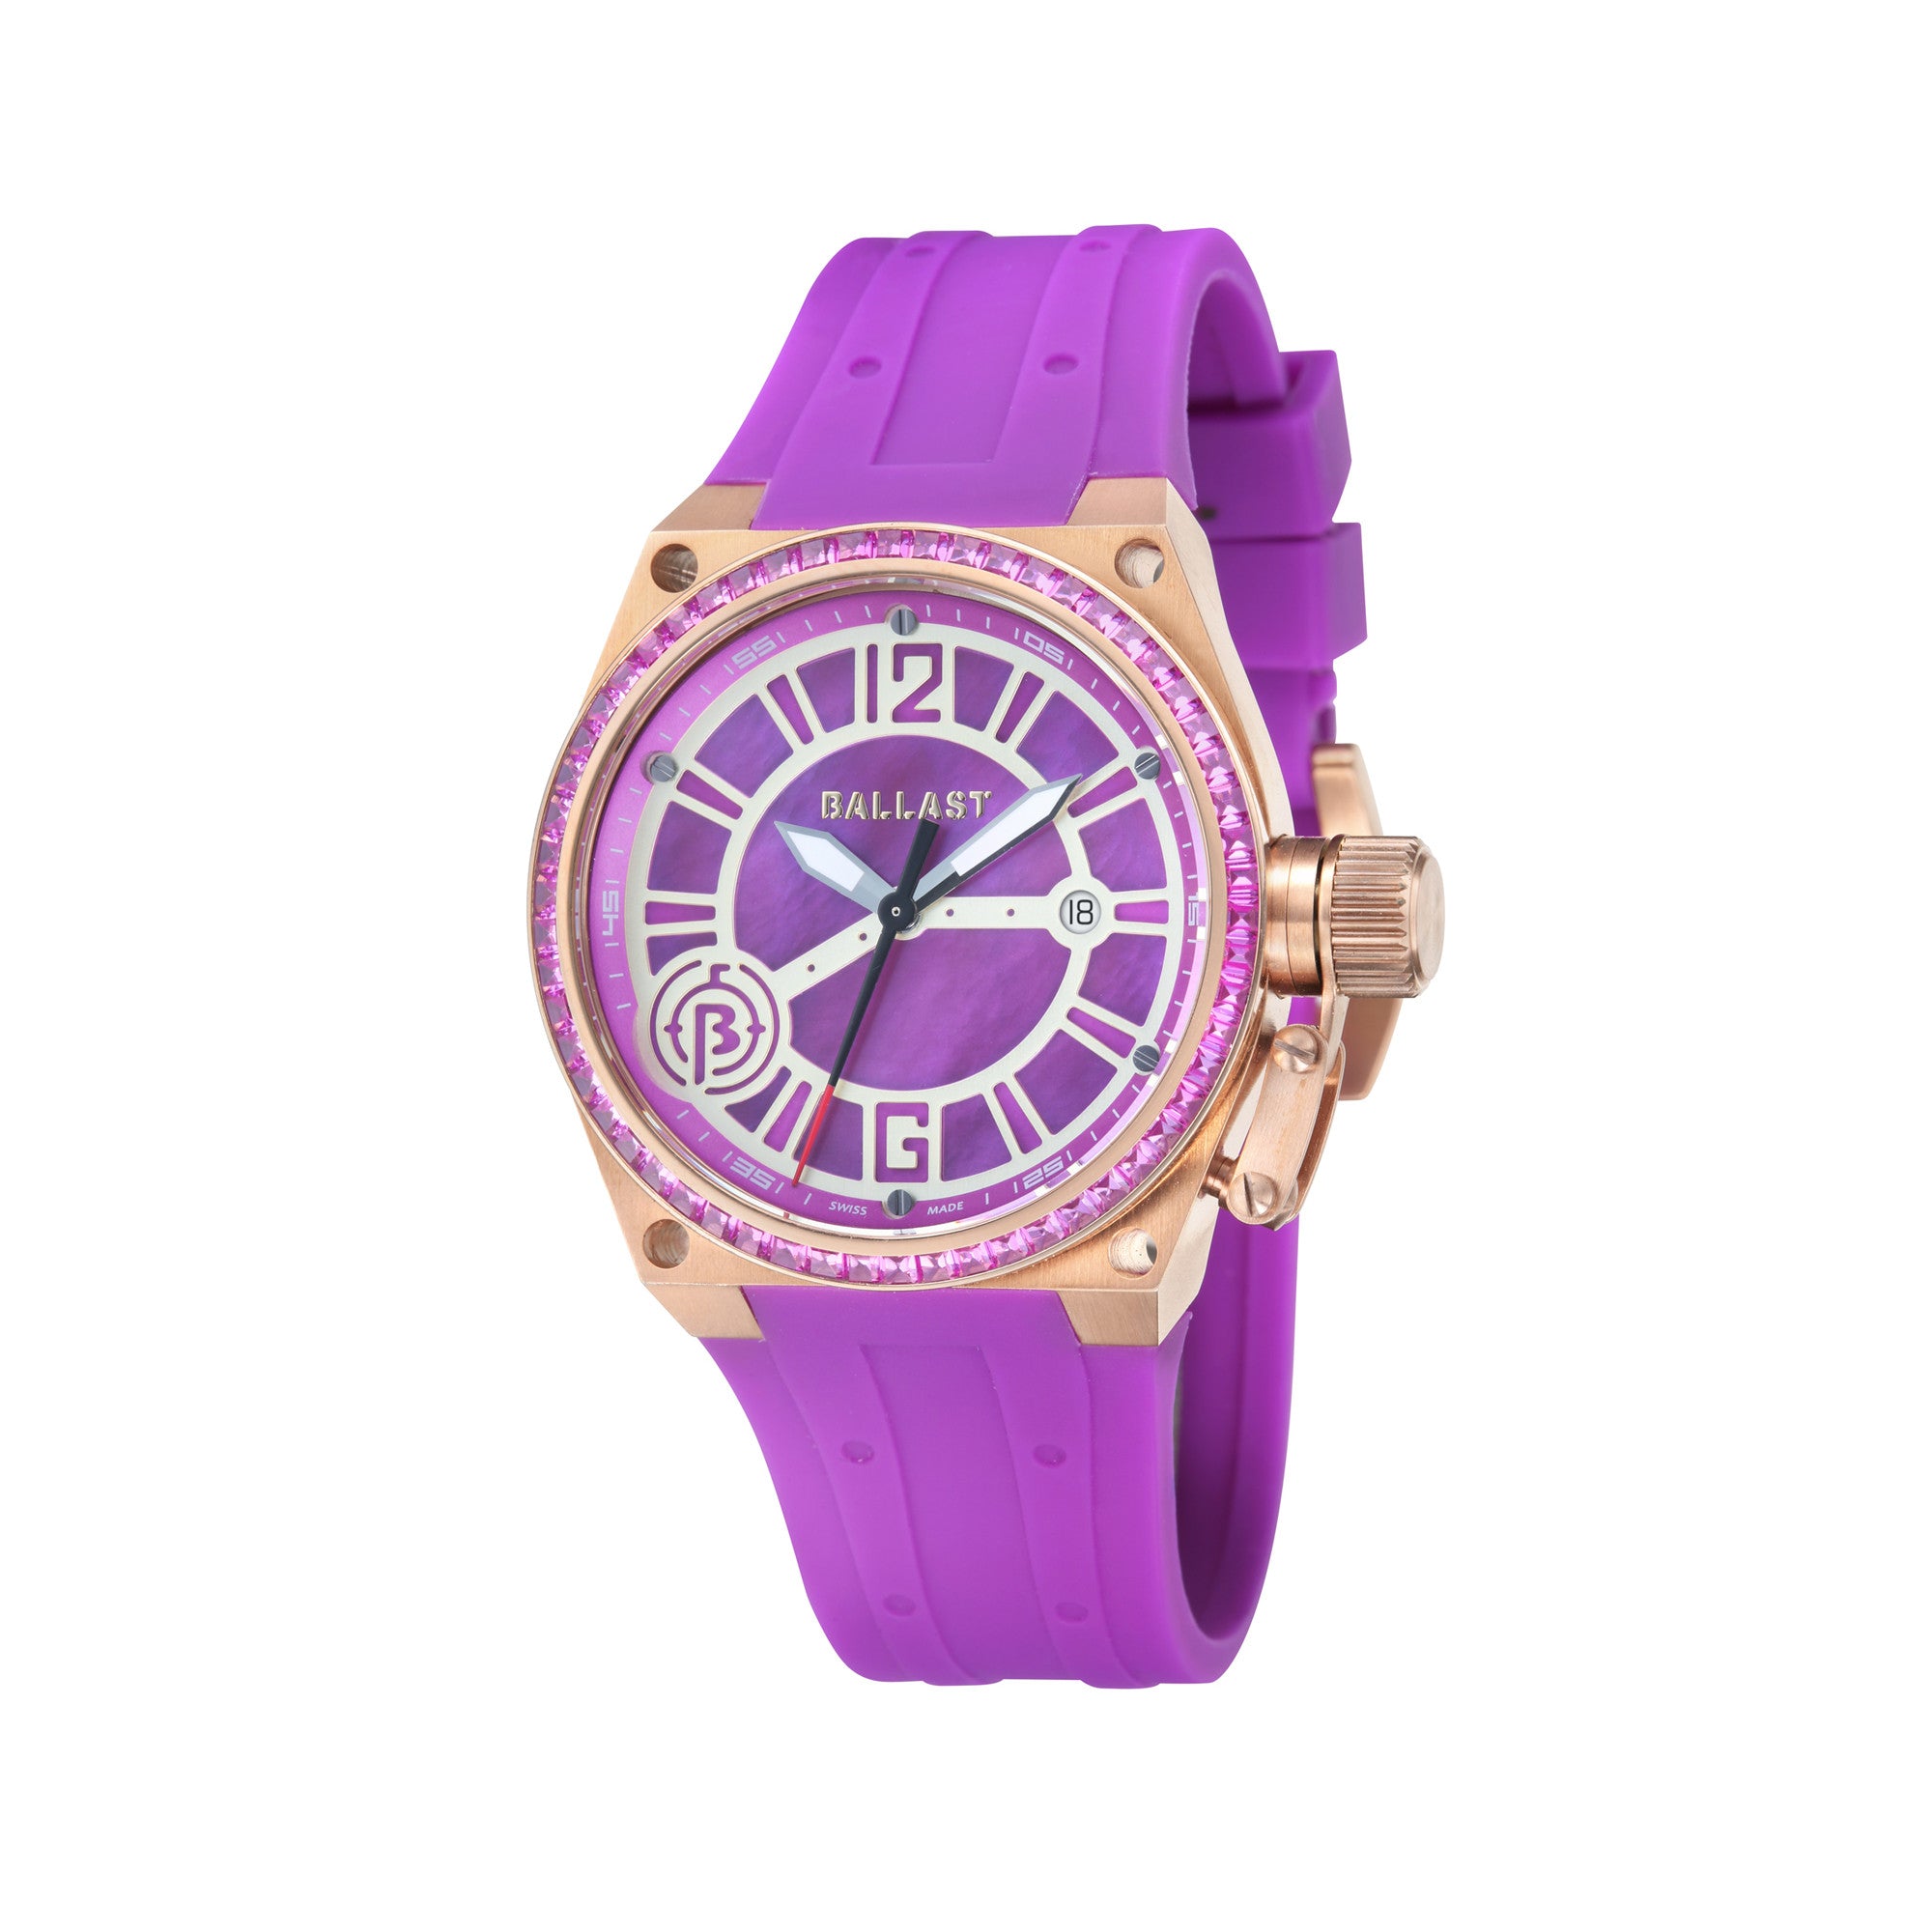 Ballast Valiant Midsize Purple Women's Quartz Watch BL-5103-07